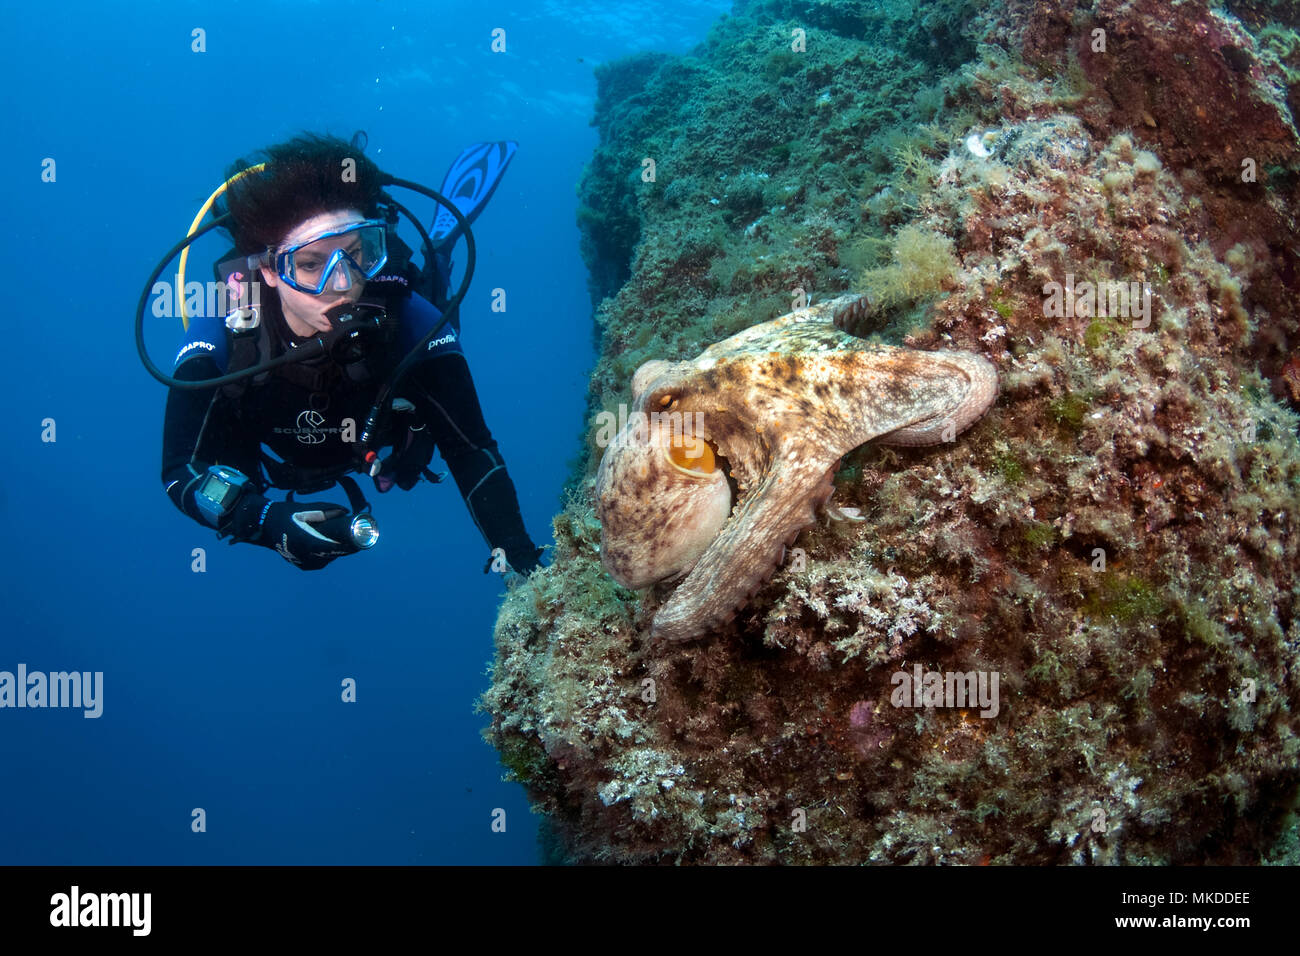 Diver and Common Octopus (Octopus vulgaris) on the reef, Scandola, Corsica, Mediterranean Sea Stock Photo